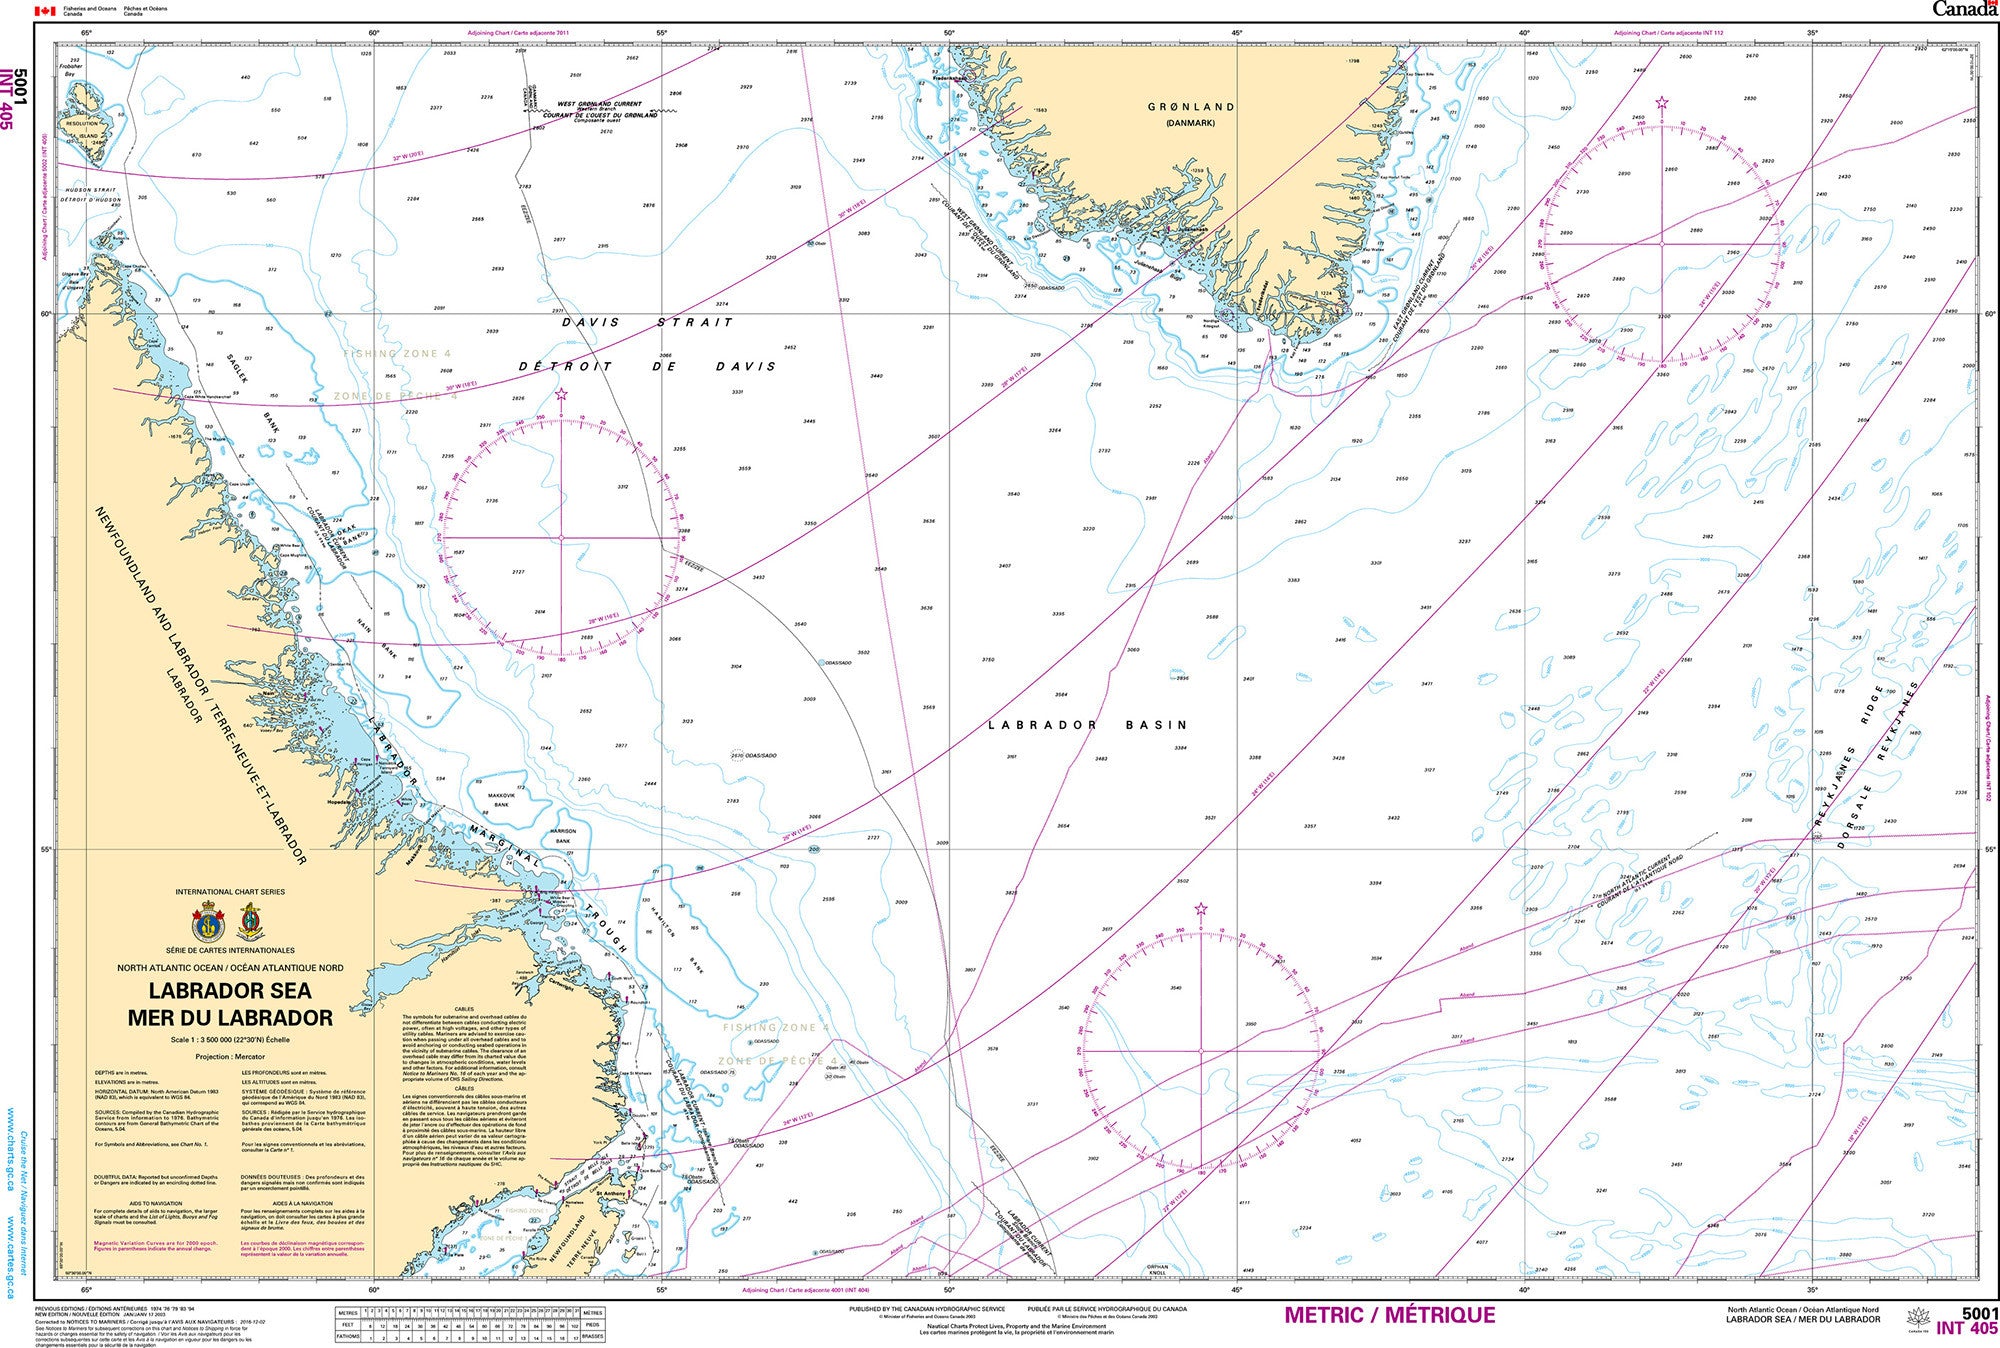 Canadian Hydrographic Service Nautical Chart CHS5001: Labrador Sea/ Mer du Labrador